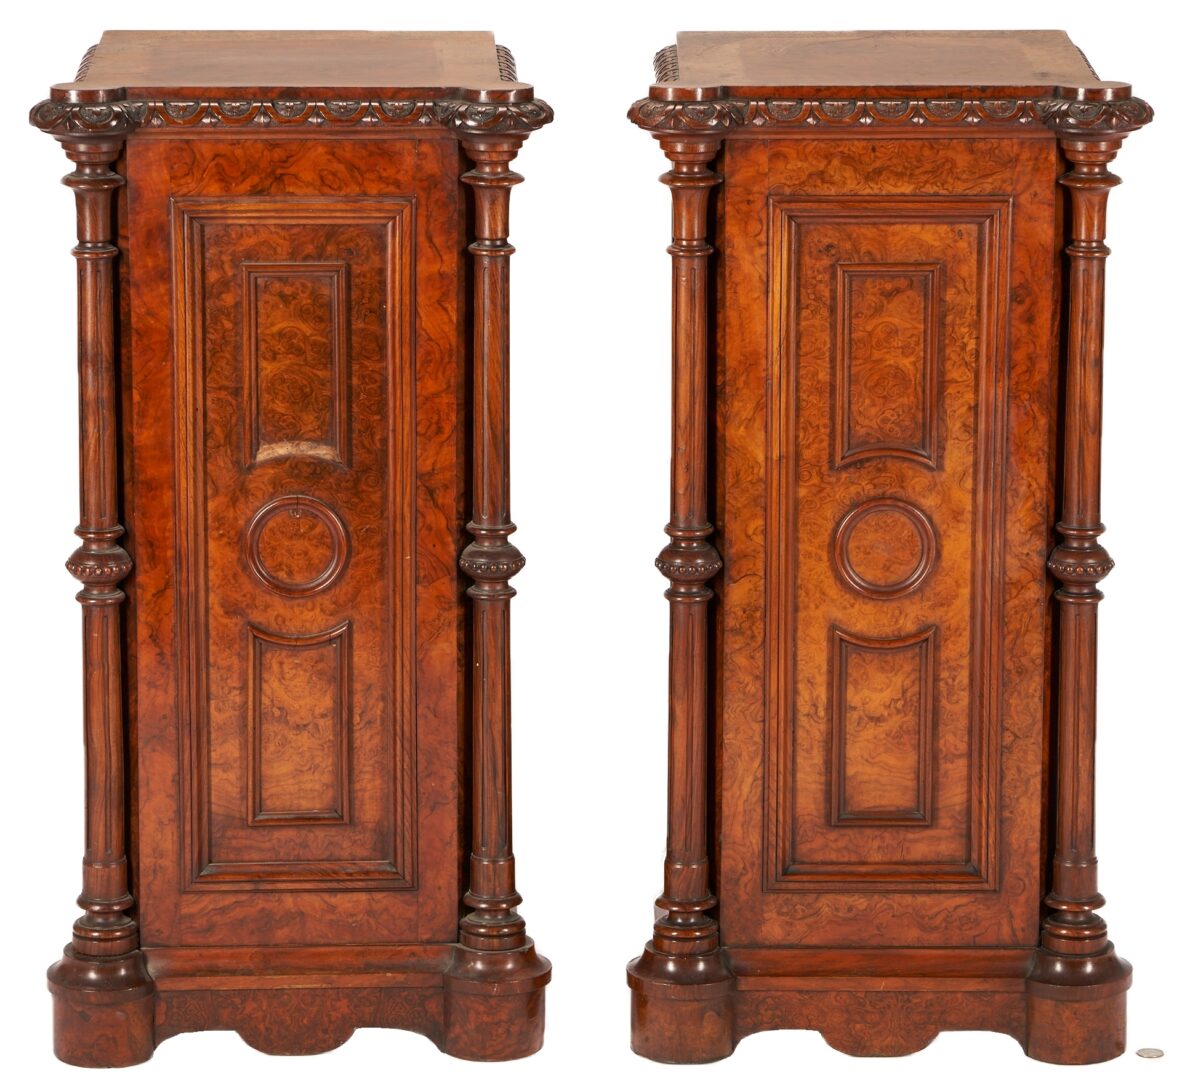 Lot 472: Pair of Continental Renaissance Revival Burlwood Pedestals